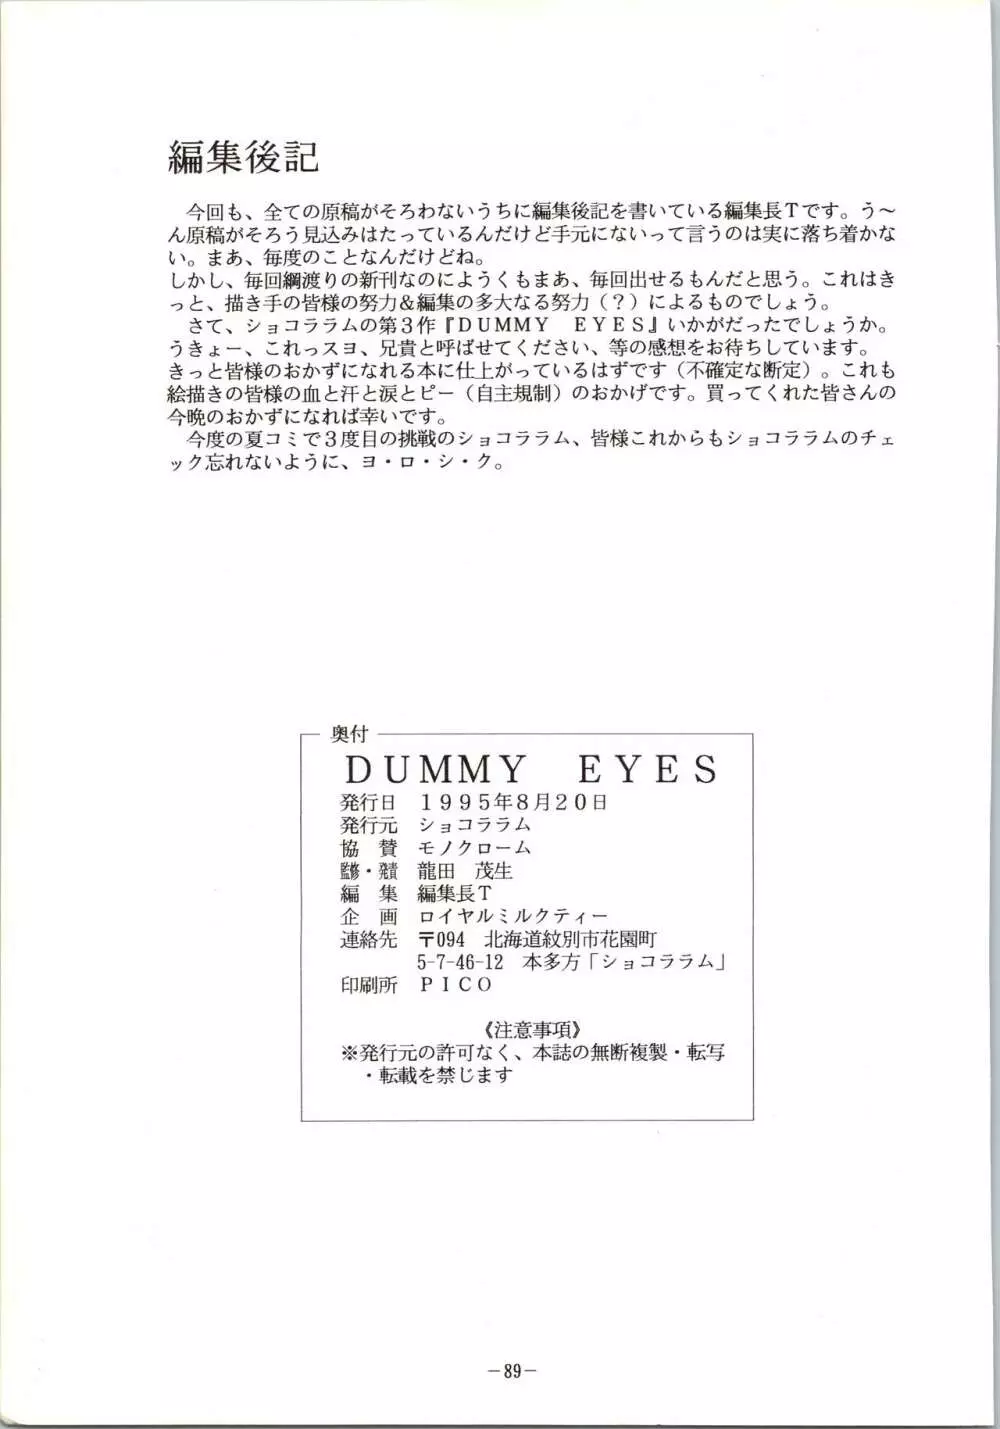 DUMMY EYES - page89